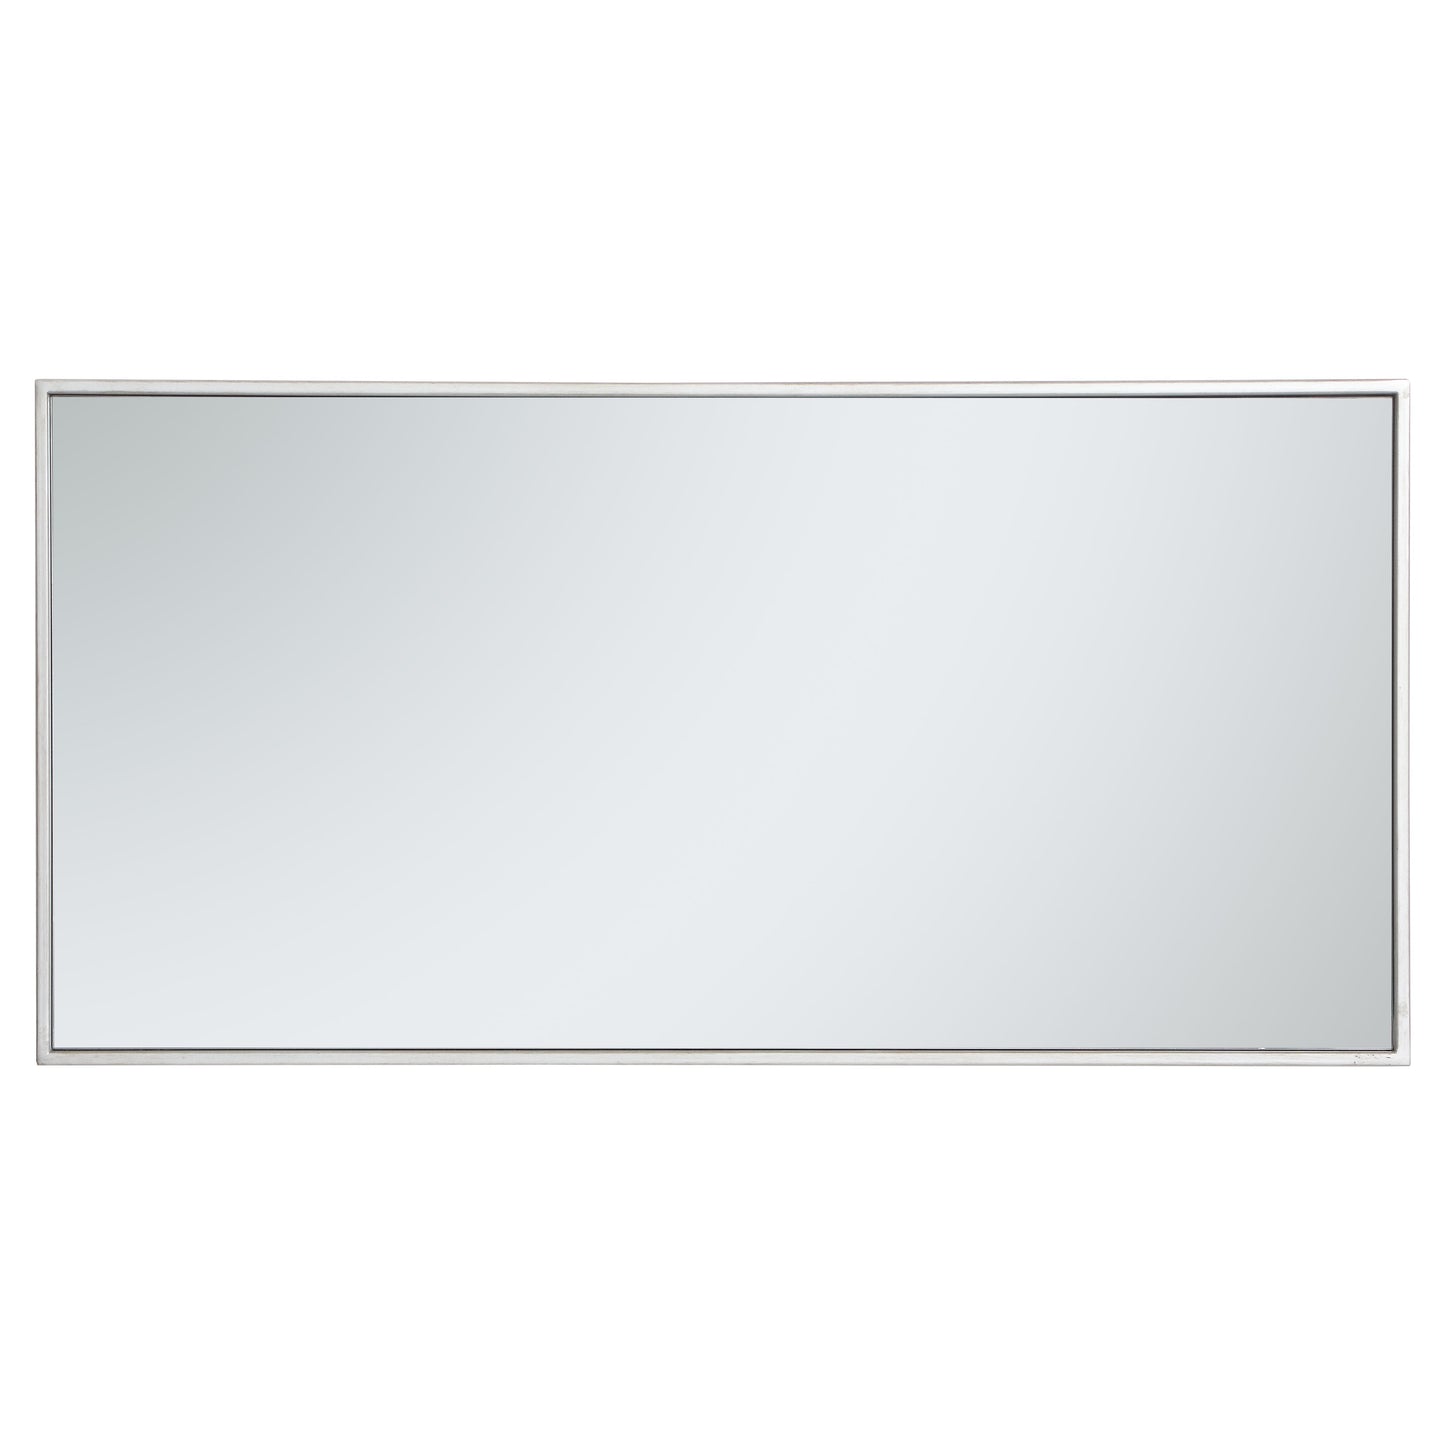 MR41836S Monet 18" x 36" Metal Framed Rectangular Mirror in Silver